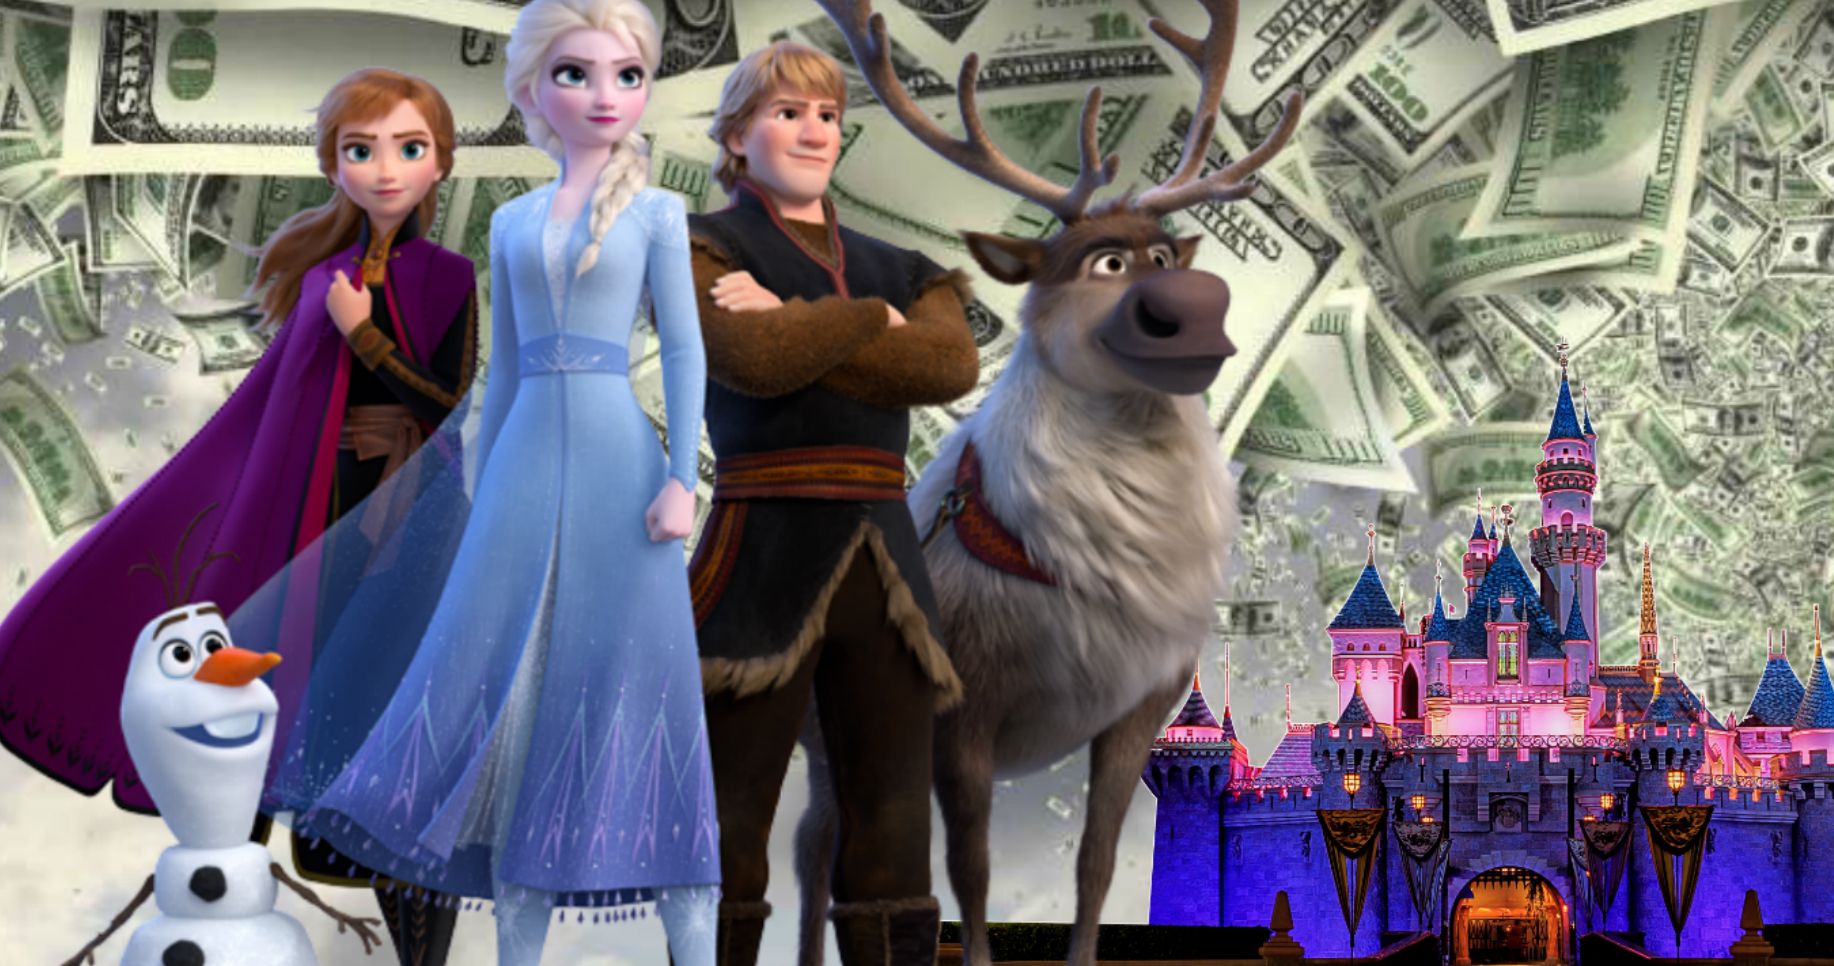 Frozen 2 Is the 6th Disney Movie to Hit $1 Billion in 2019